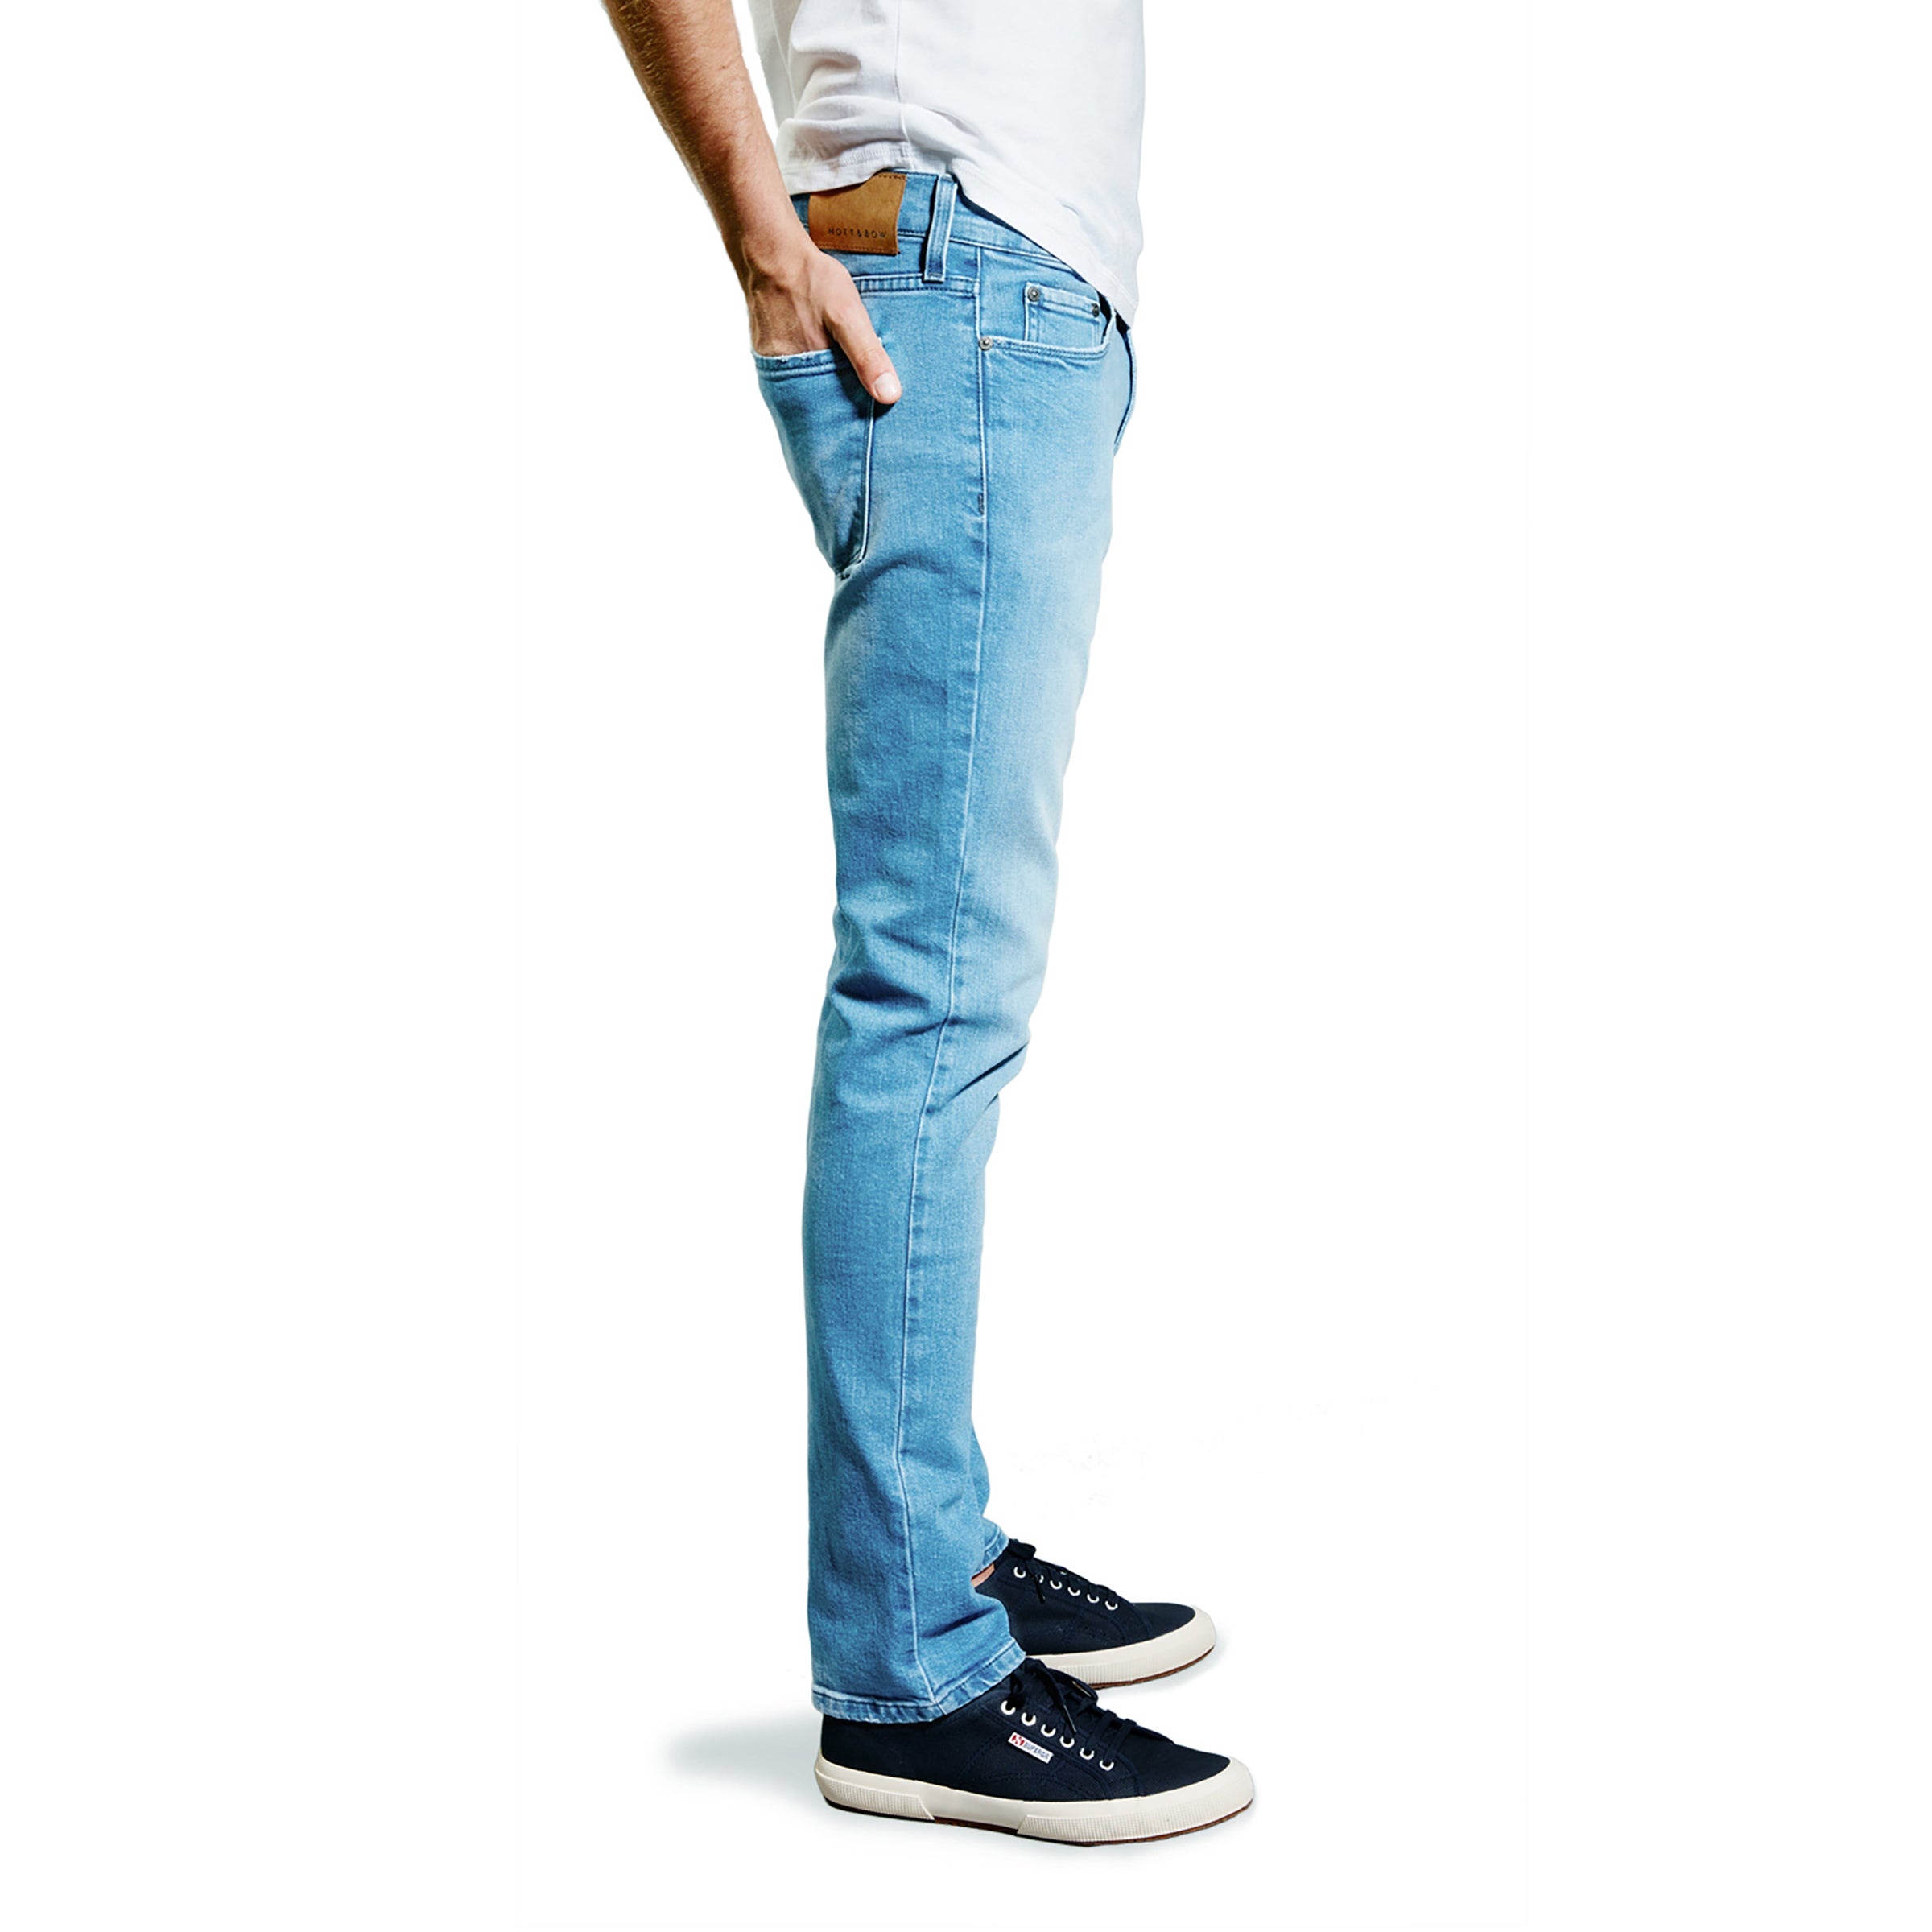 Men wearing Light Blue Slim Laight Jeans